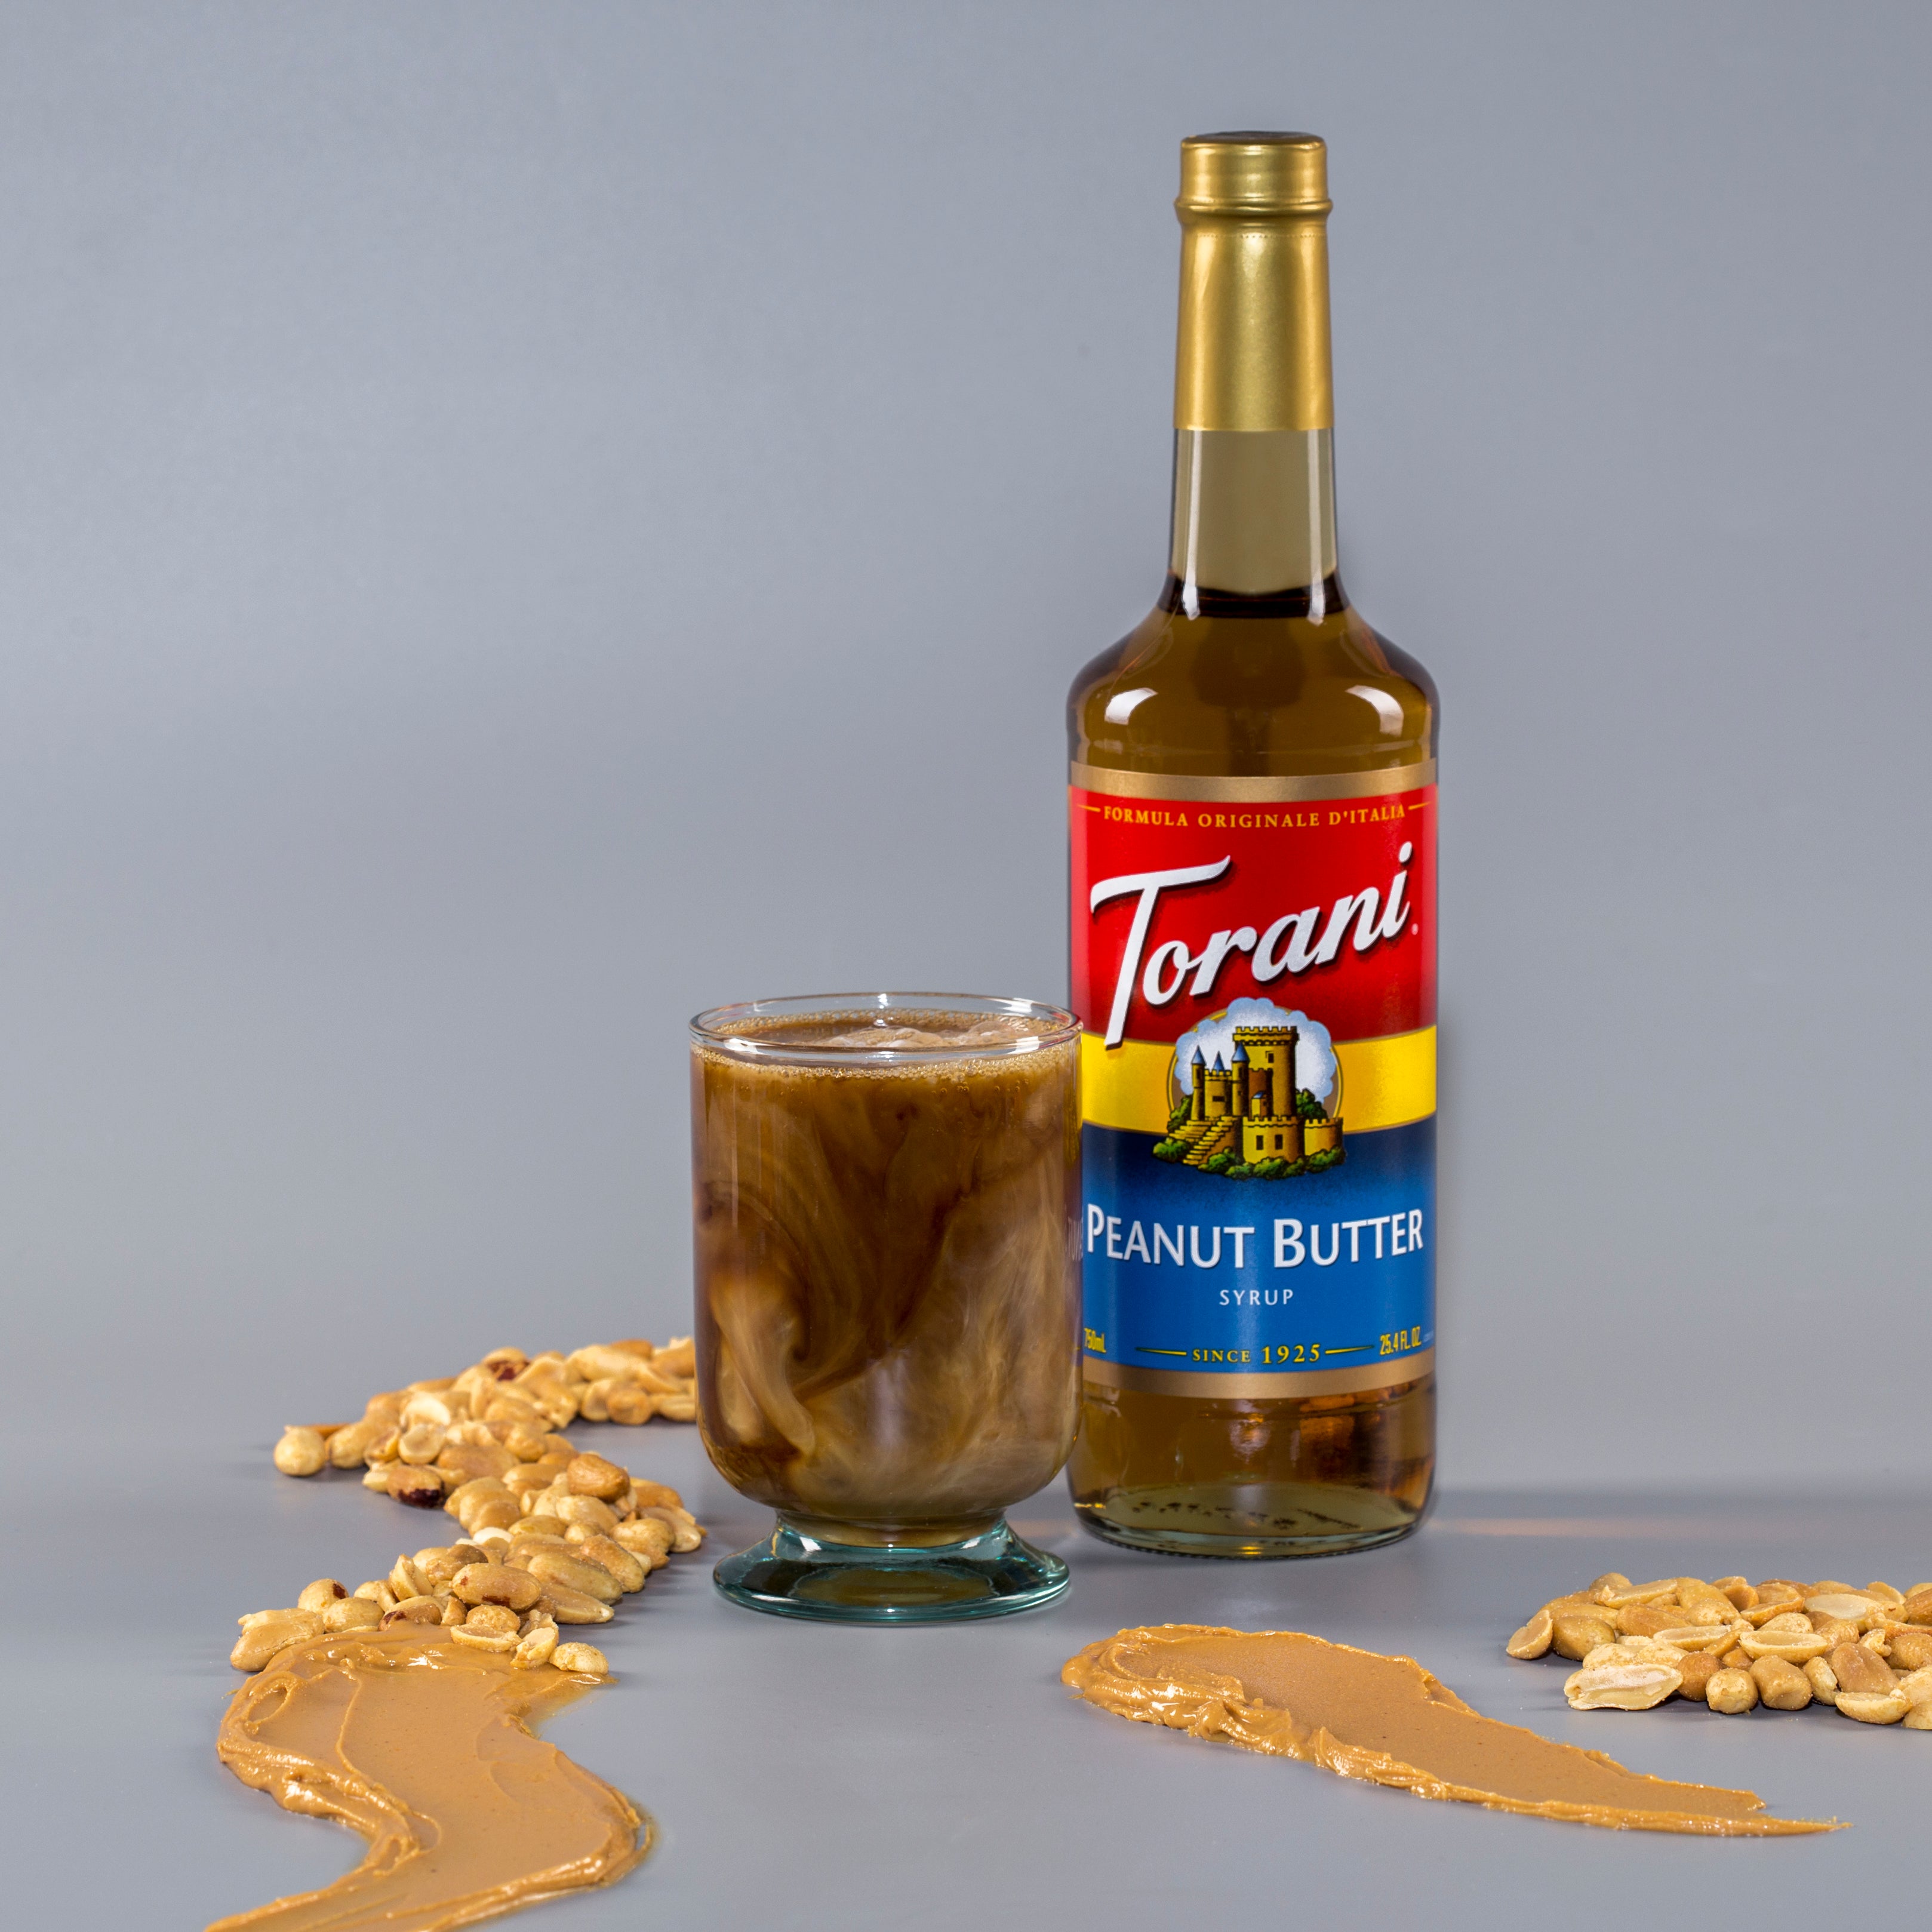 Torani Sugar Free Flavored Syrups - 750 ml Glass Bottle: Peanut Butter